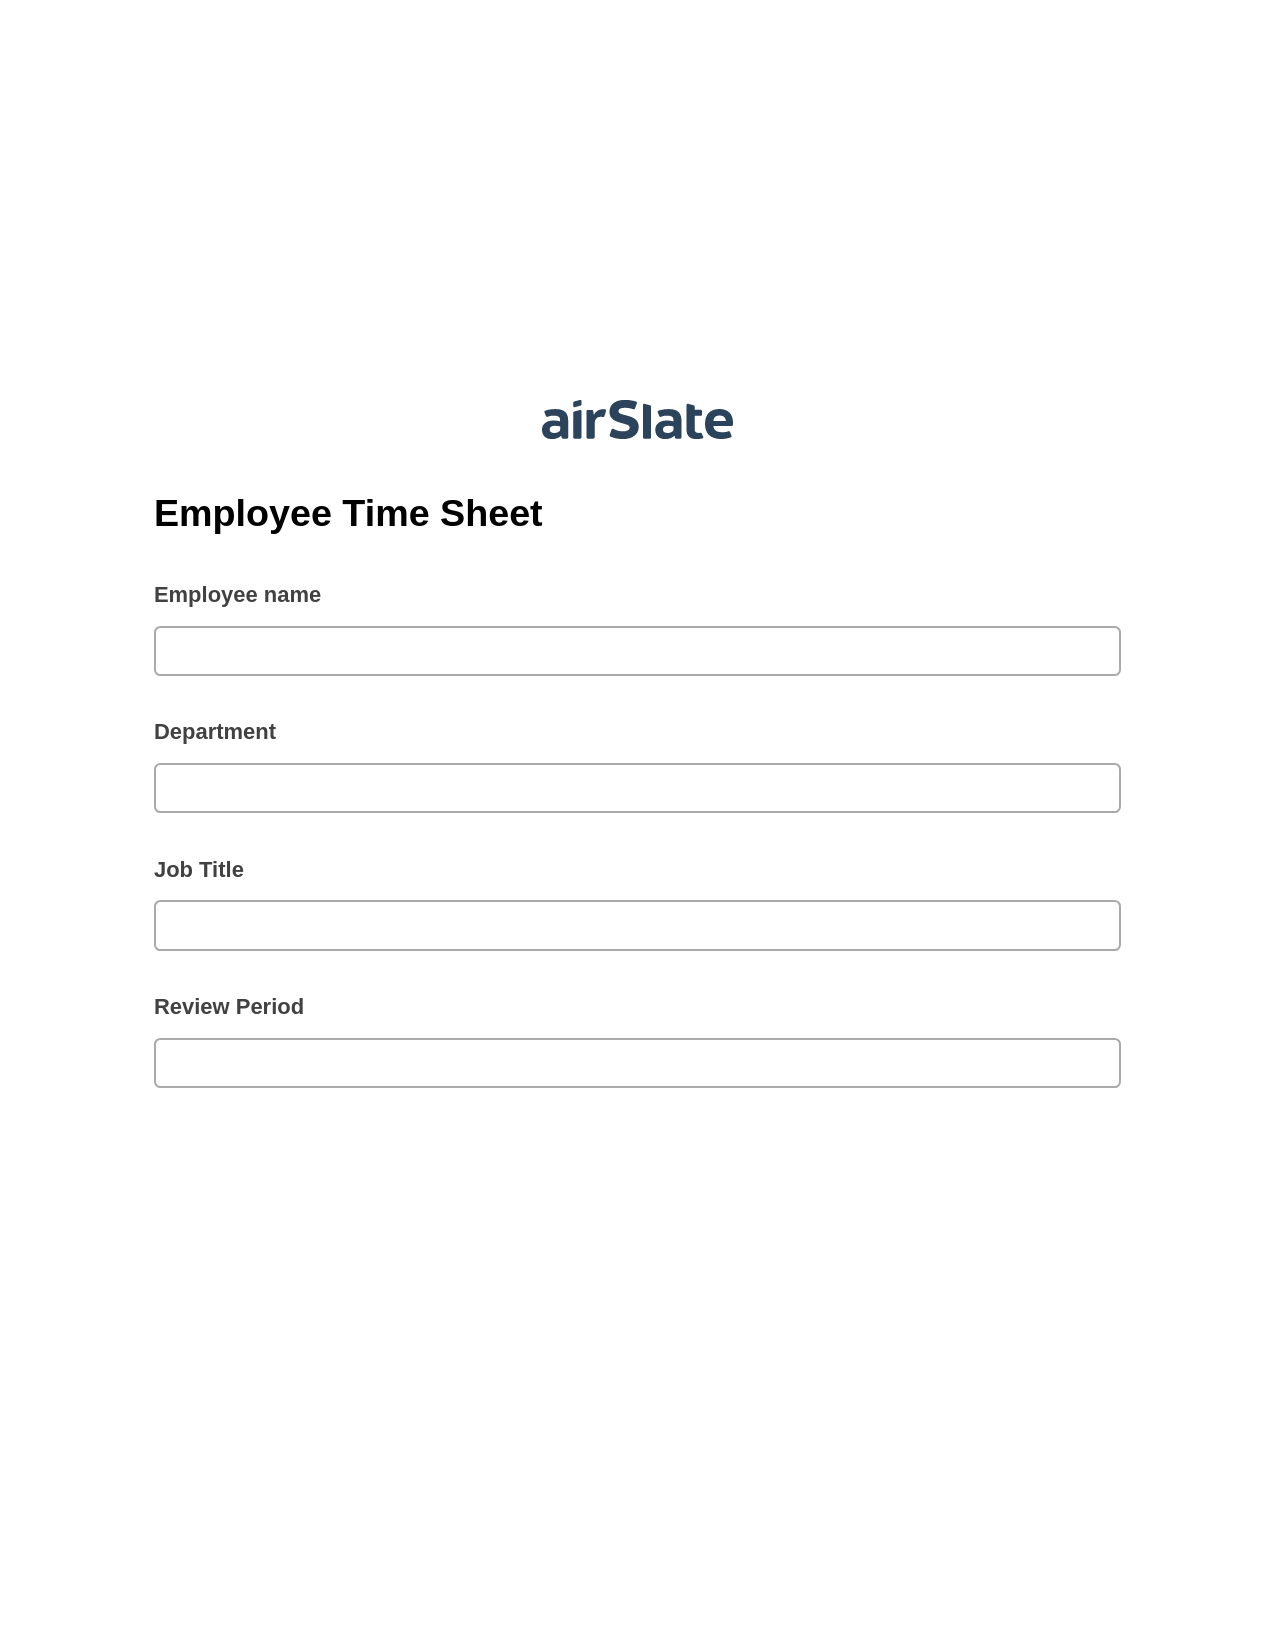 Employee Time Sheet Pre-fill Document Bot, Update Audit Trail Bot, Slack Notification Postfinish Bot